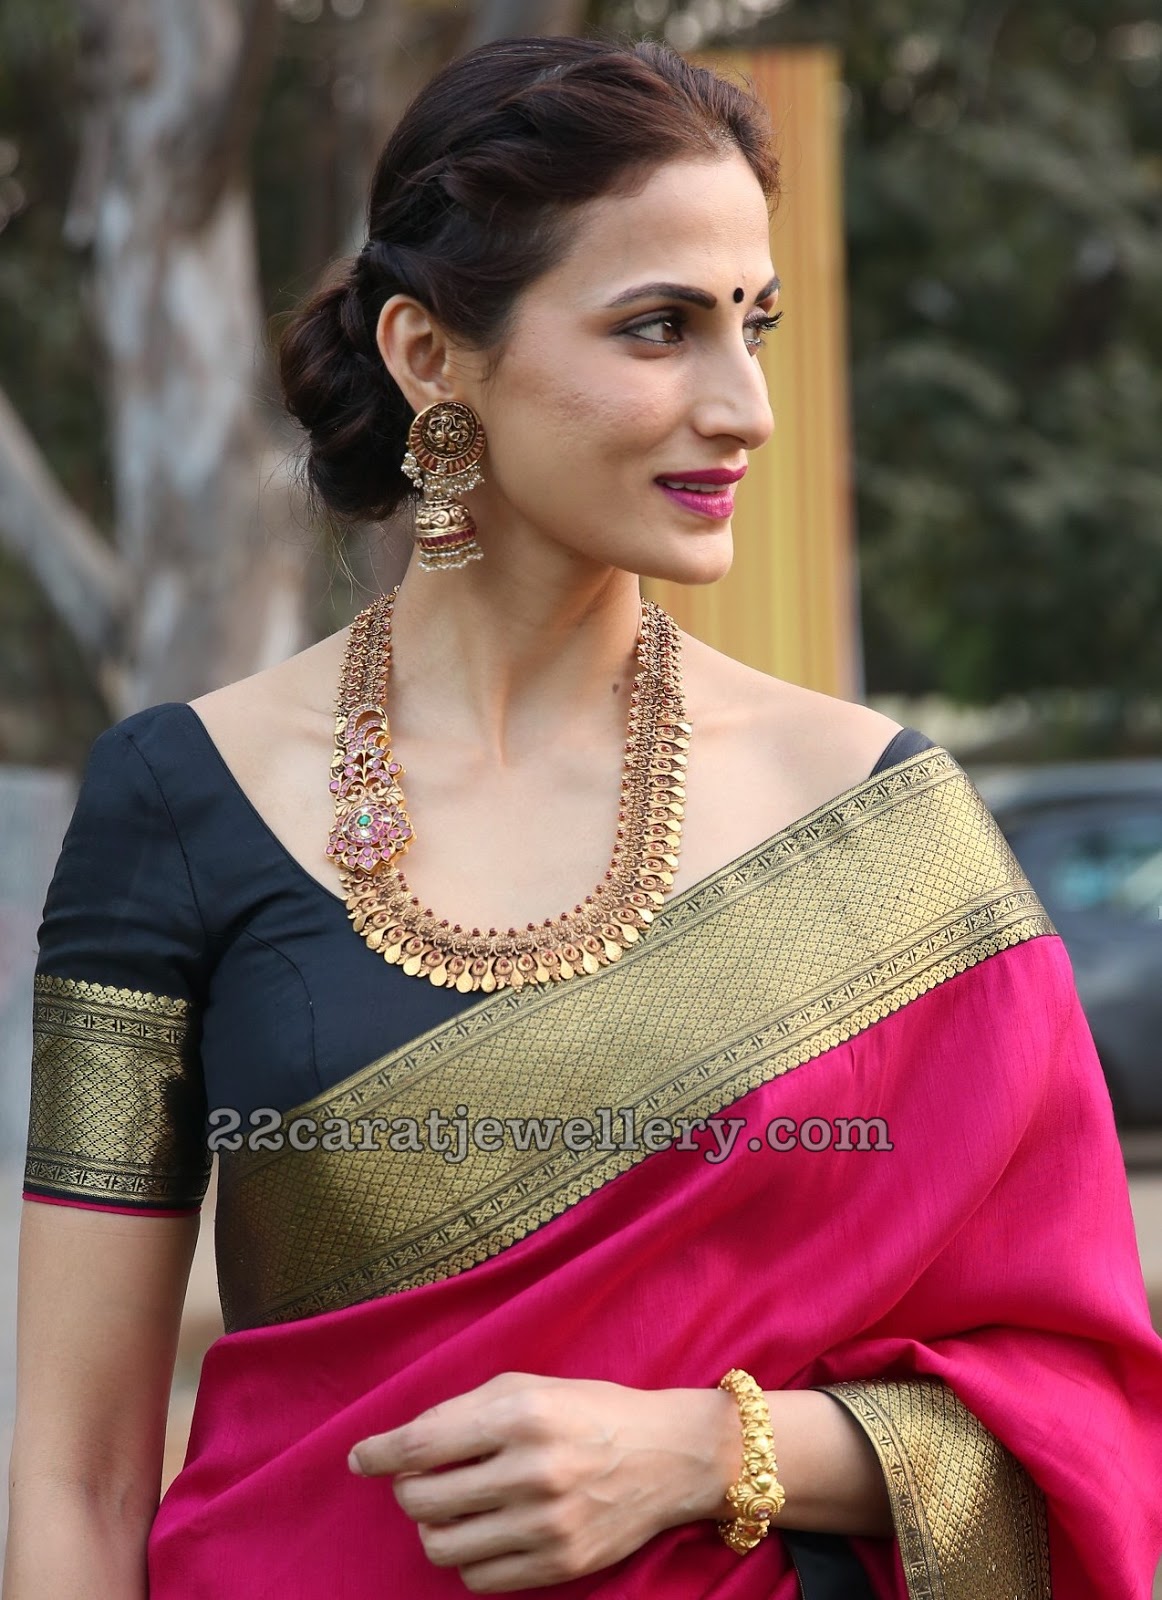 Shilpa Reddy in Antique Peacock Haram Ruby Jhumkas - Jewellery Designs